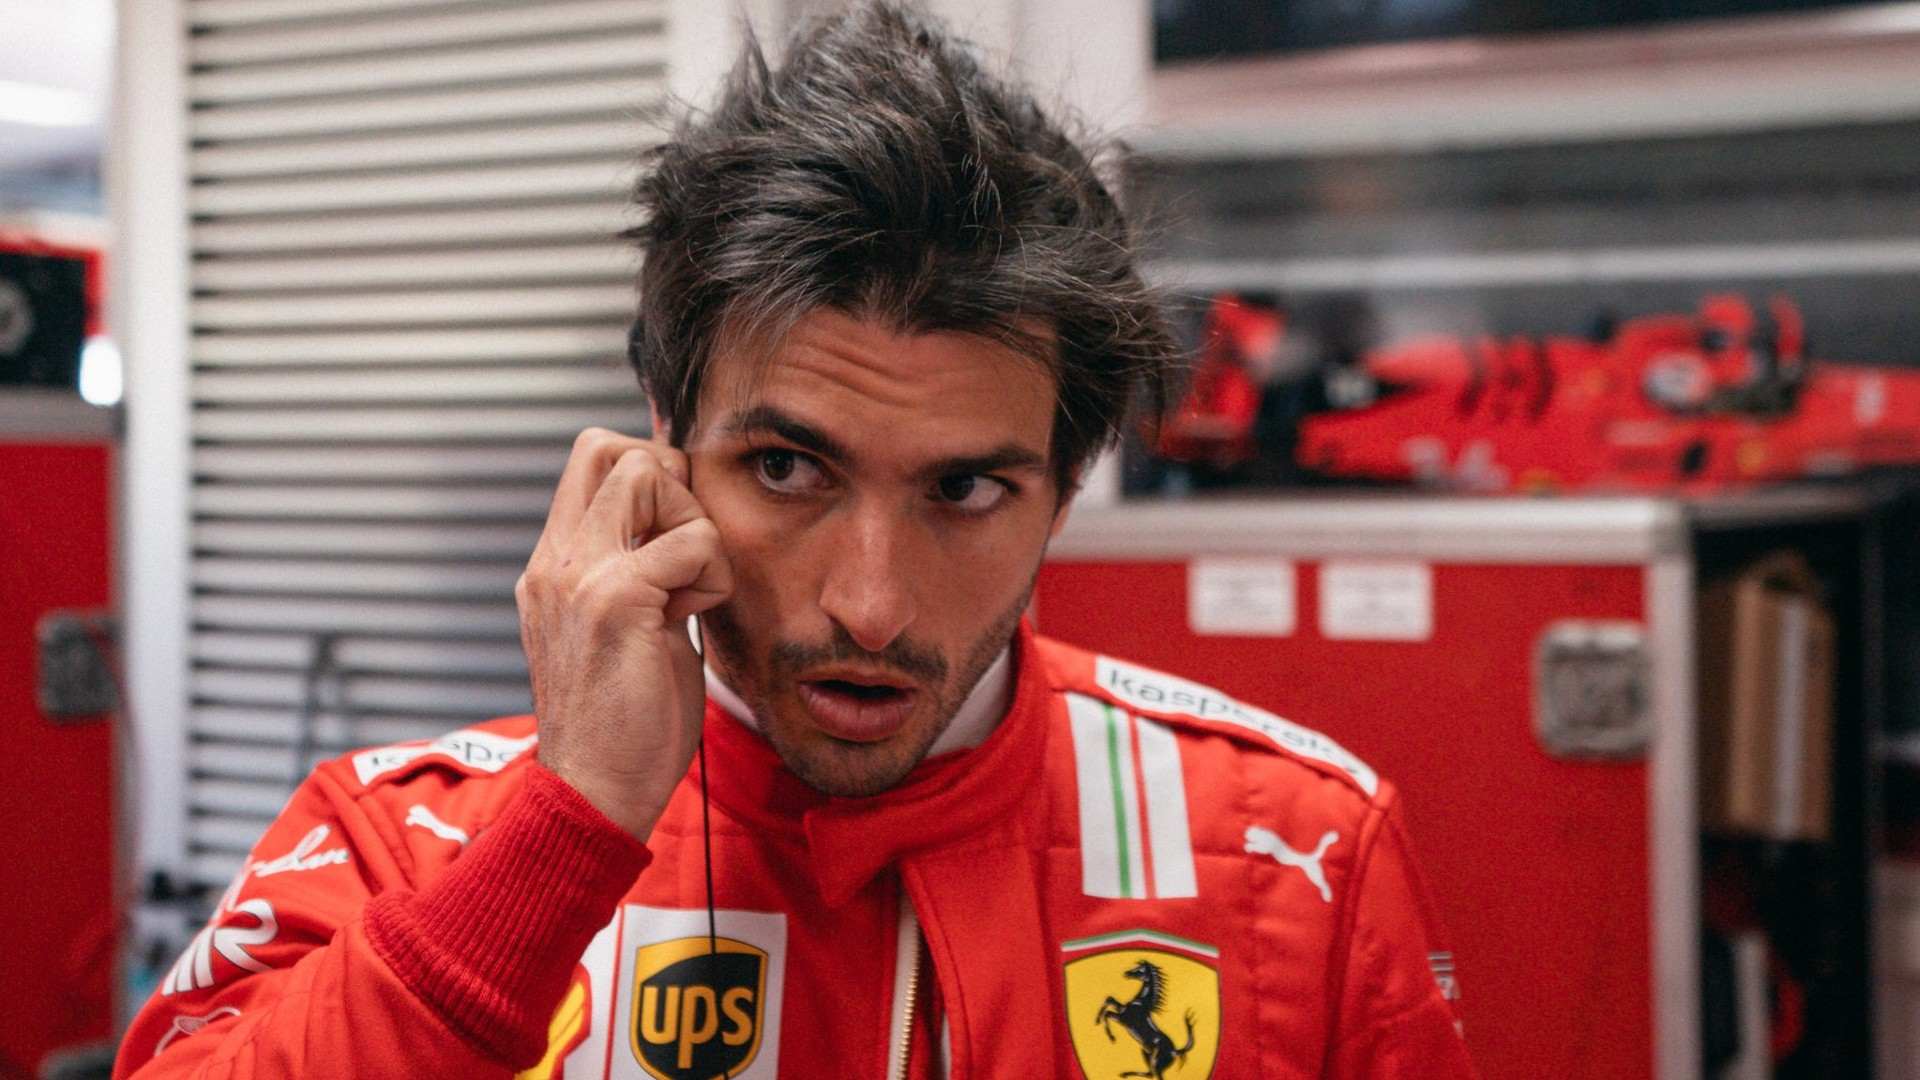 Australian GP penalty 'disproportionate', says Carlos Sainz after FIA